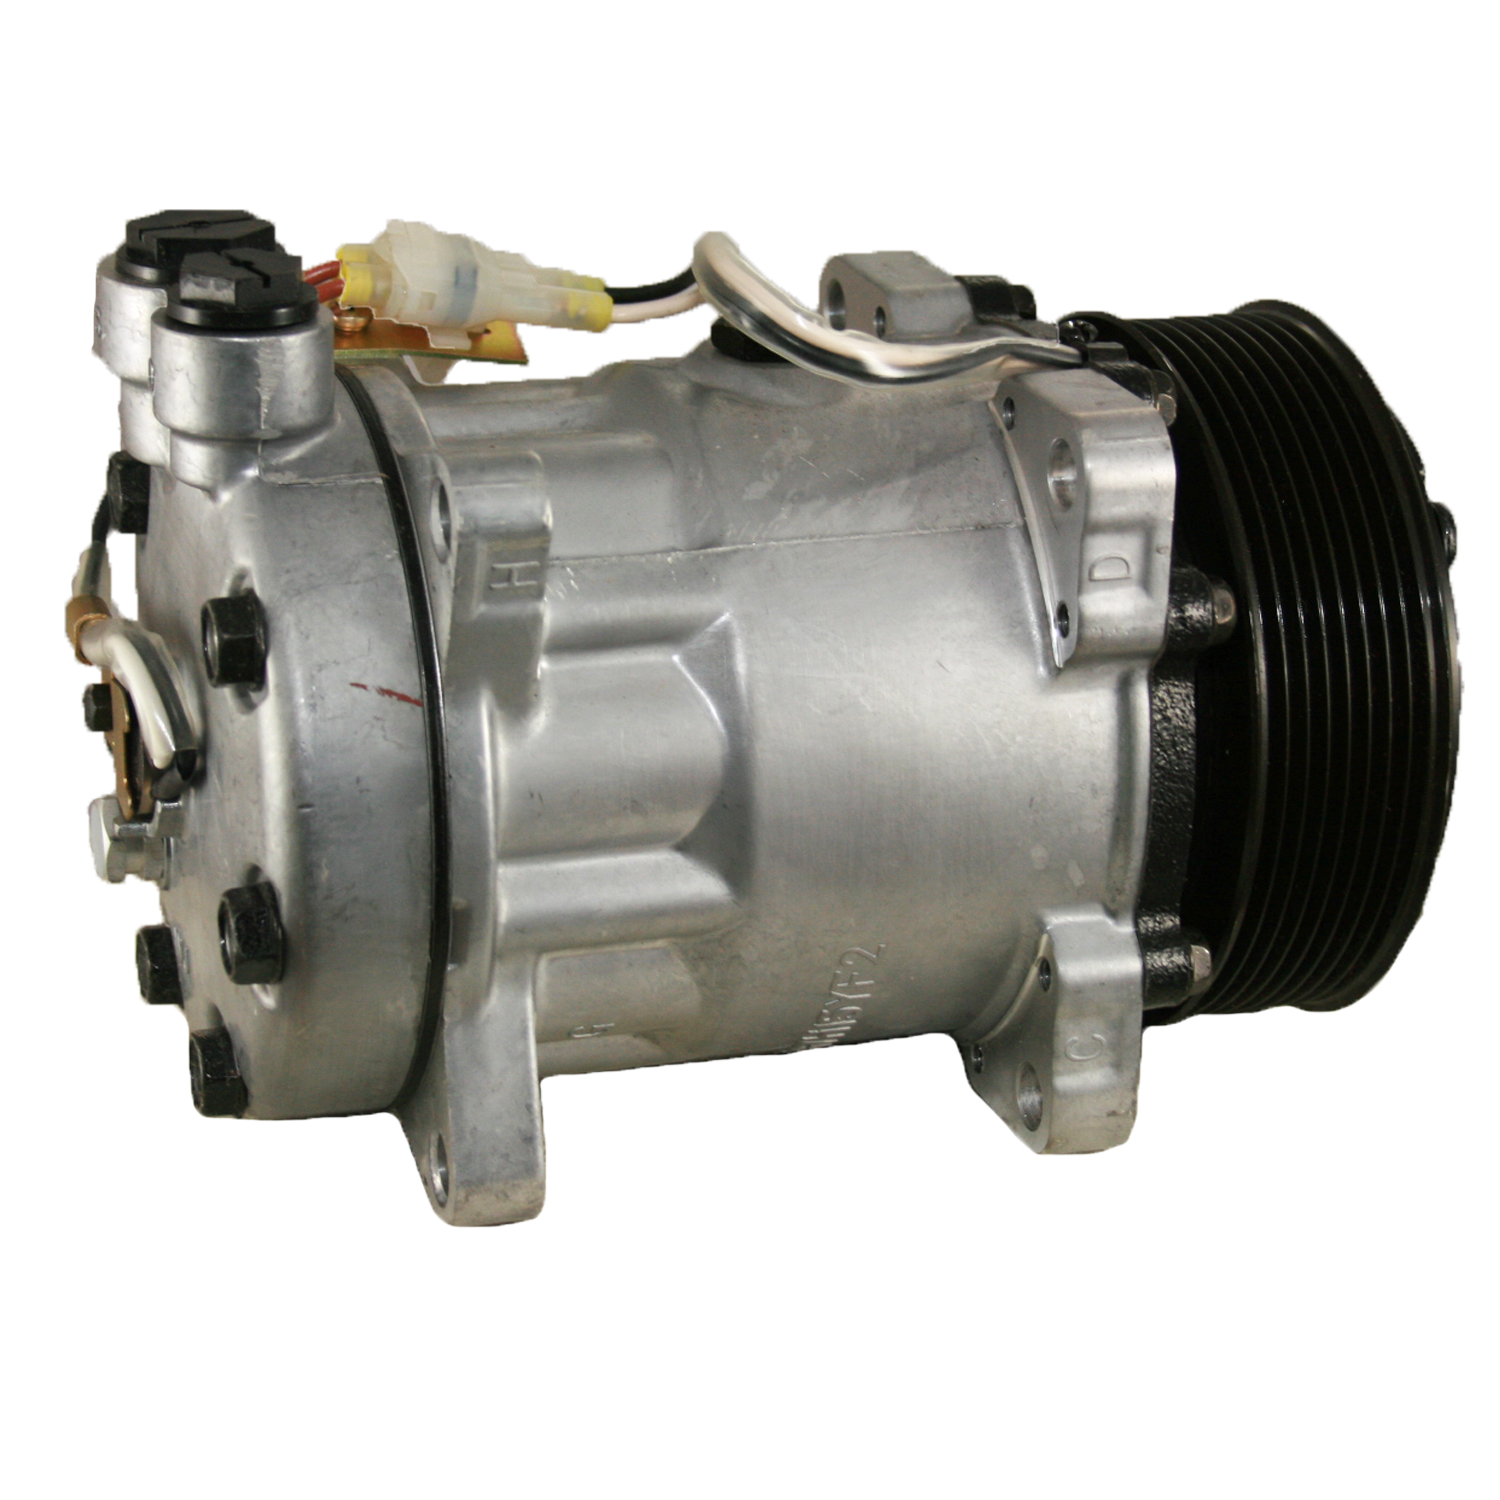 TCW Compressor 40555.8T1NEW New Product Image field_60b6a13a6e67c